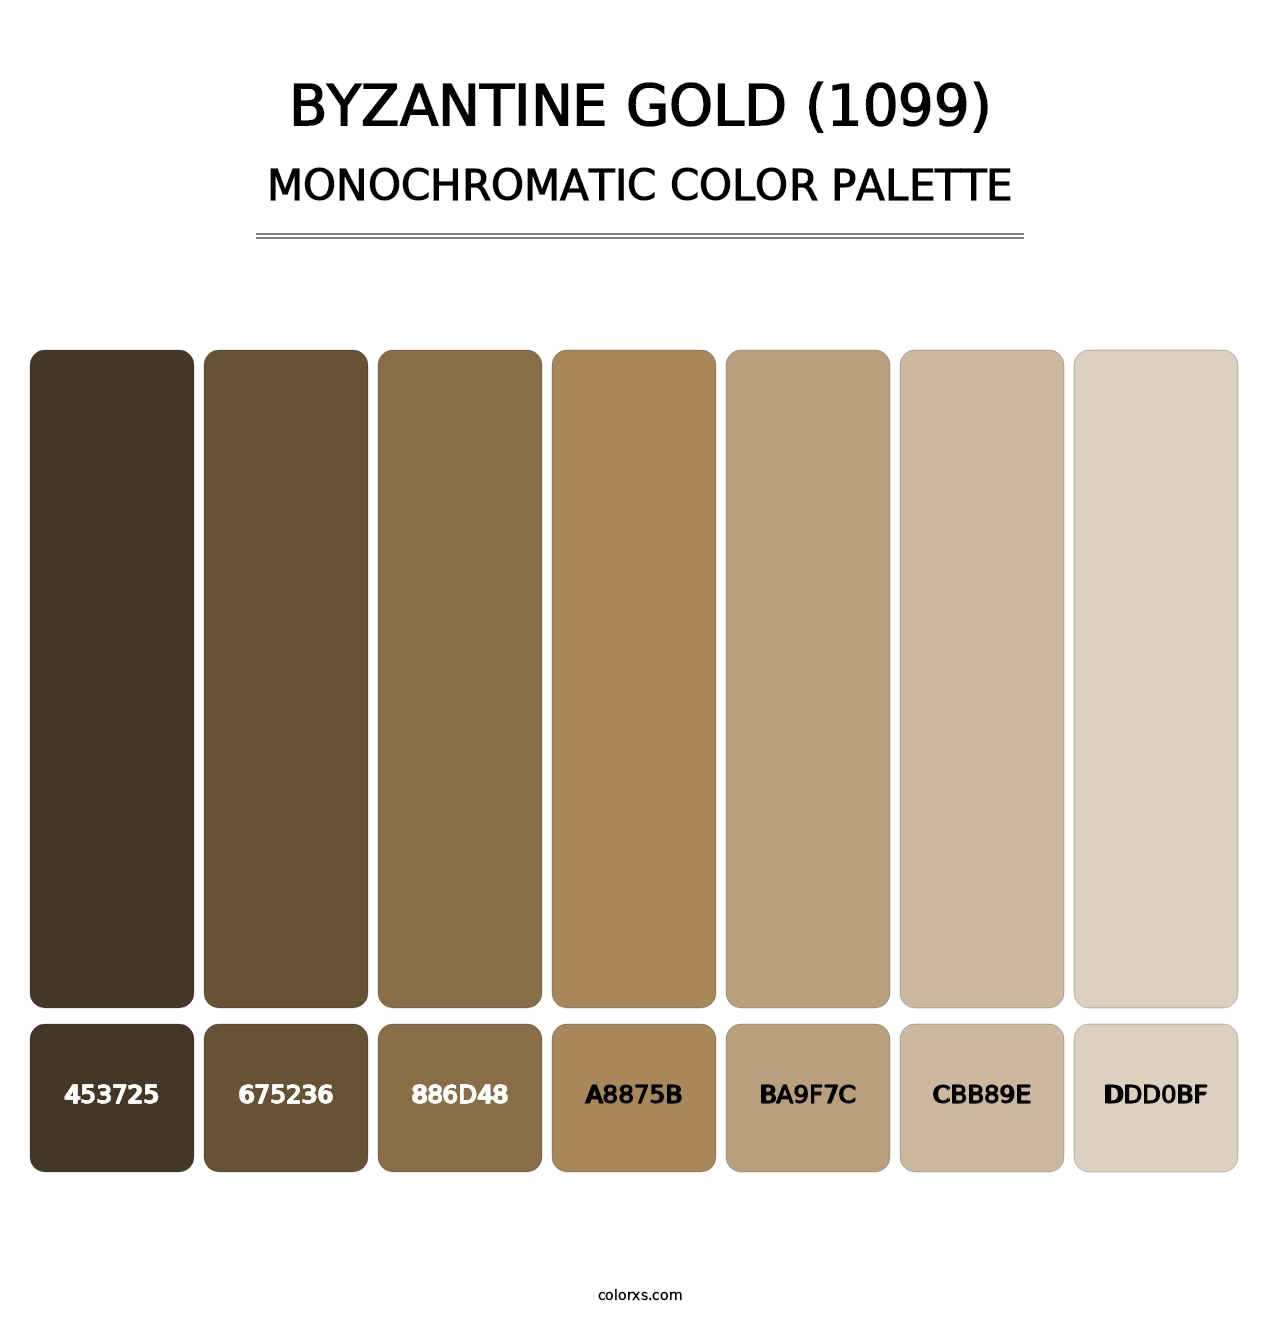 Byzantine Gold (1099) - Monochromatic Color Palette